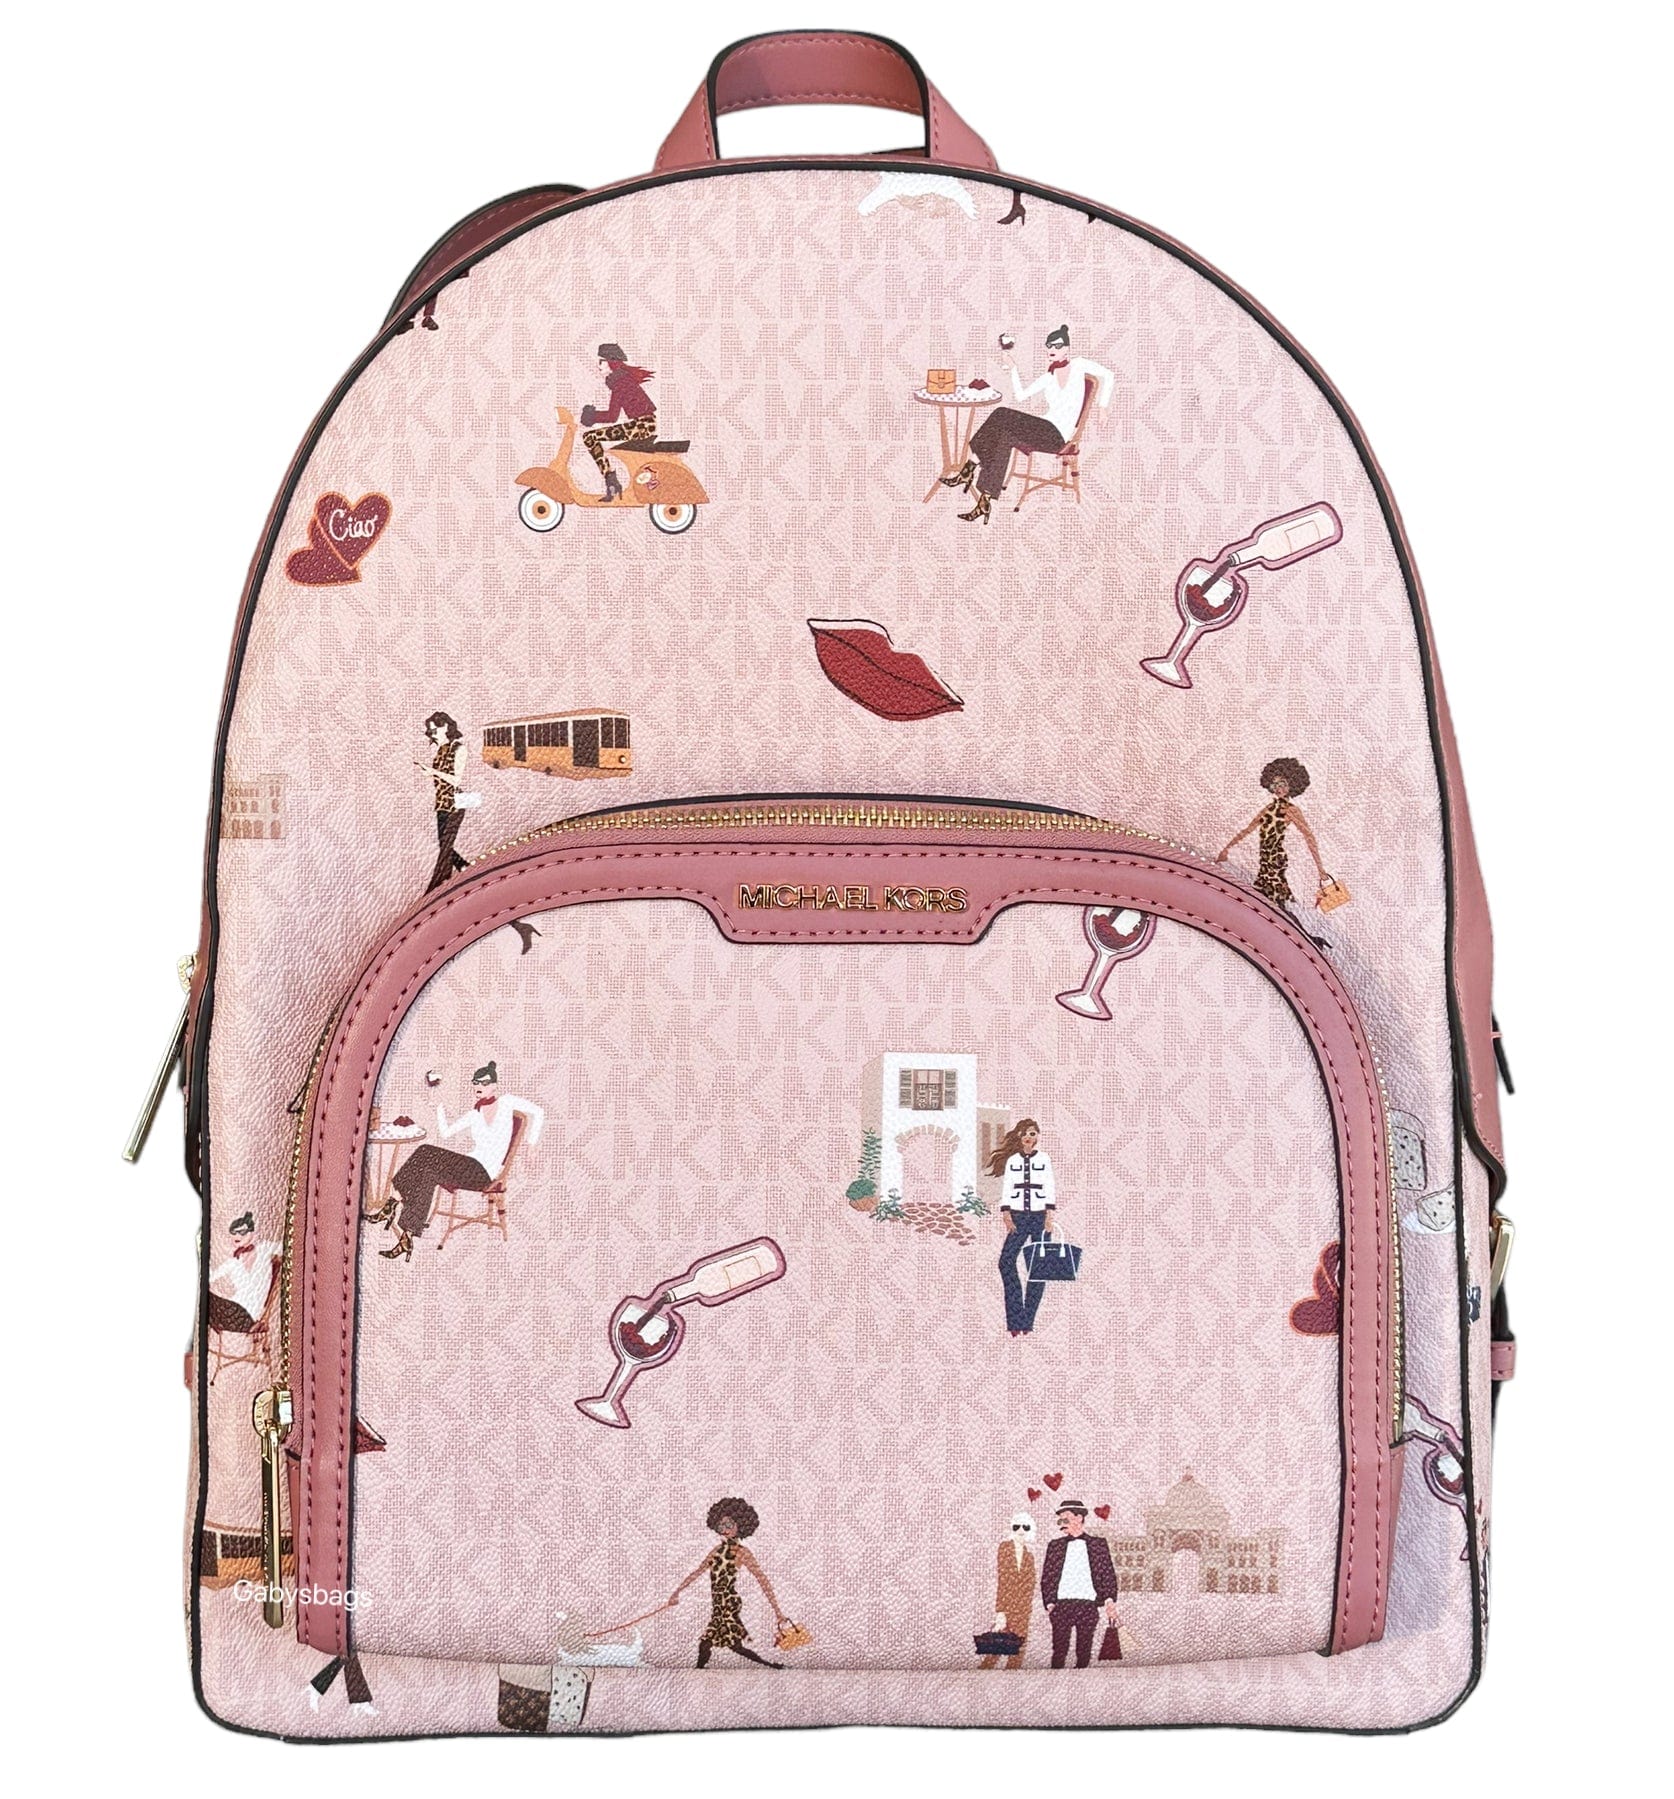 Michael Kors Jet Set Girls Jaycee Large Backpack School Bag Brown MK  Signature